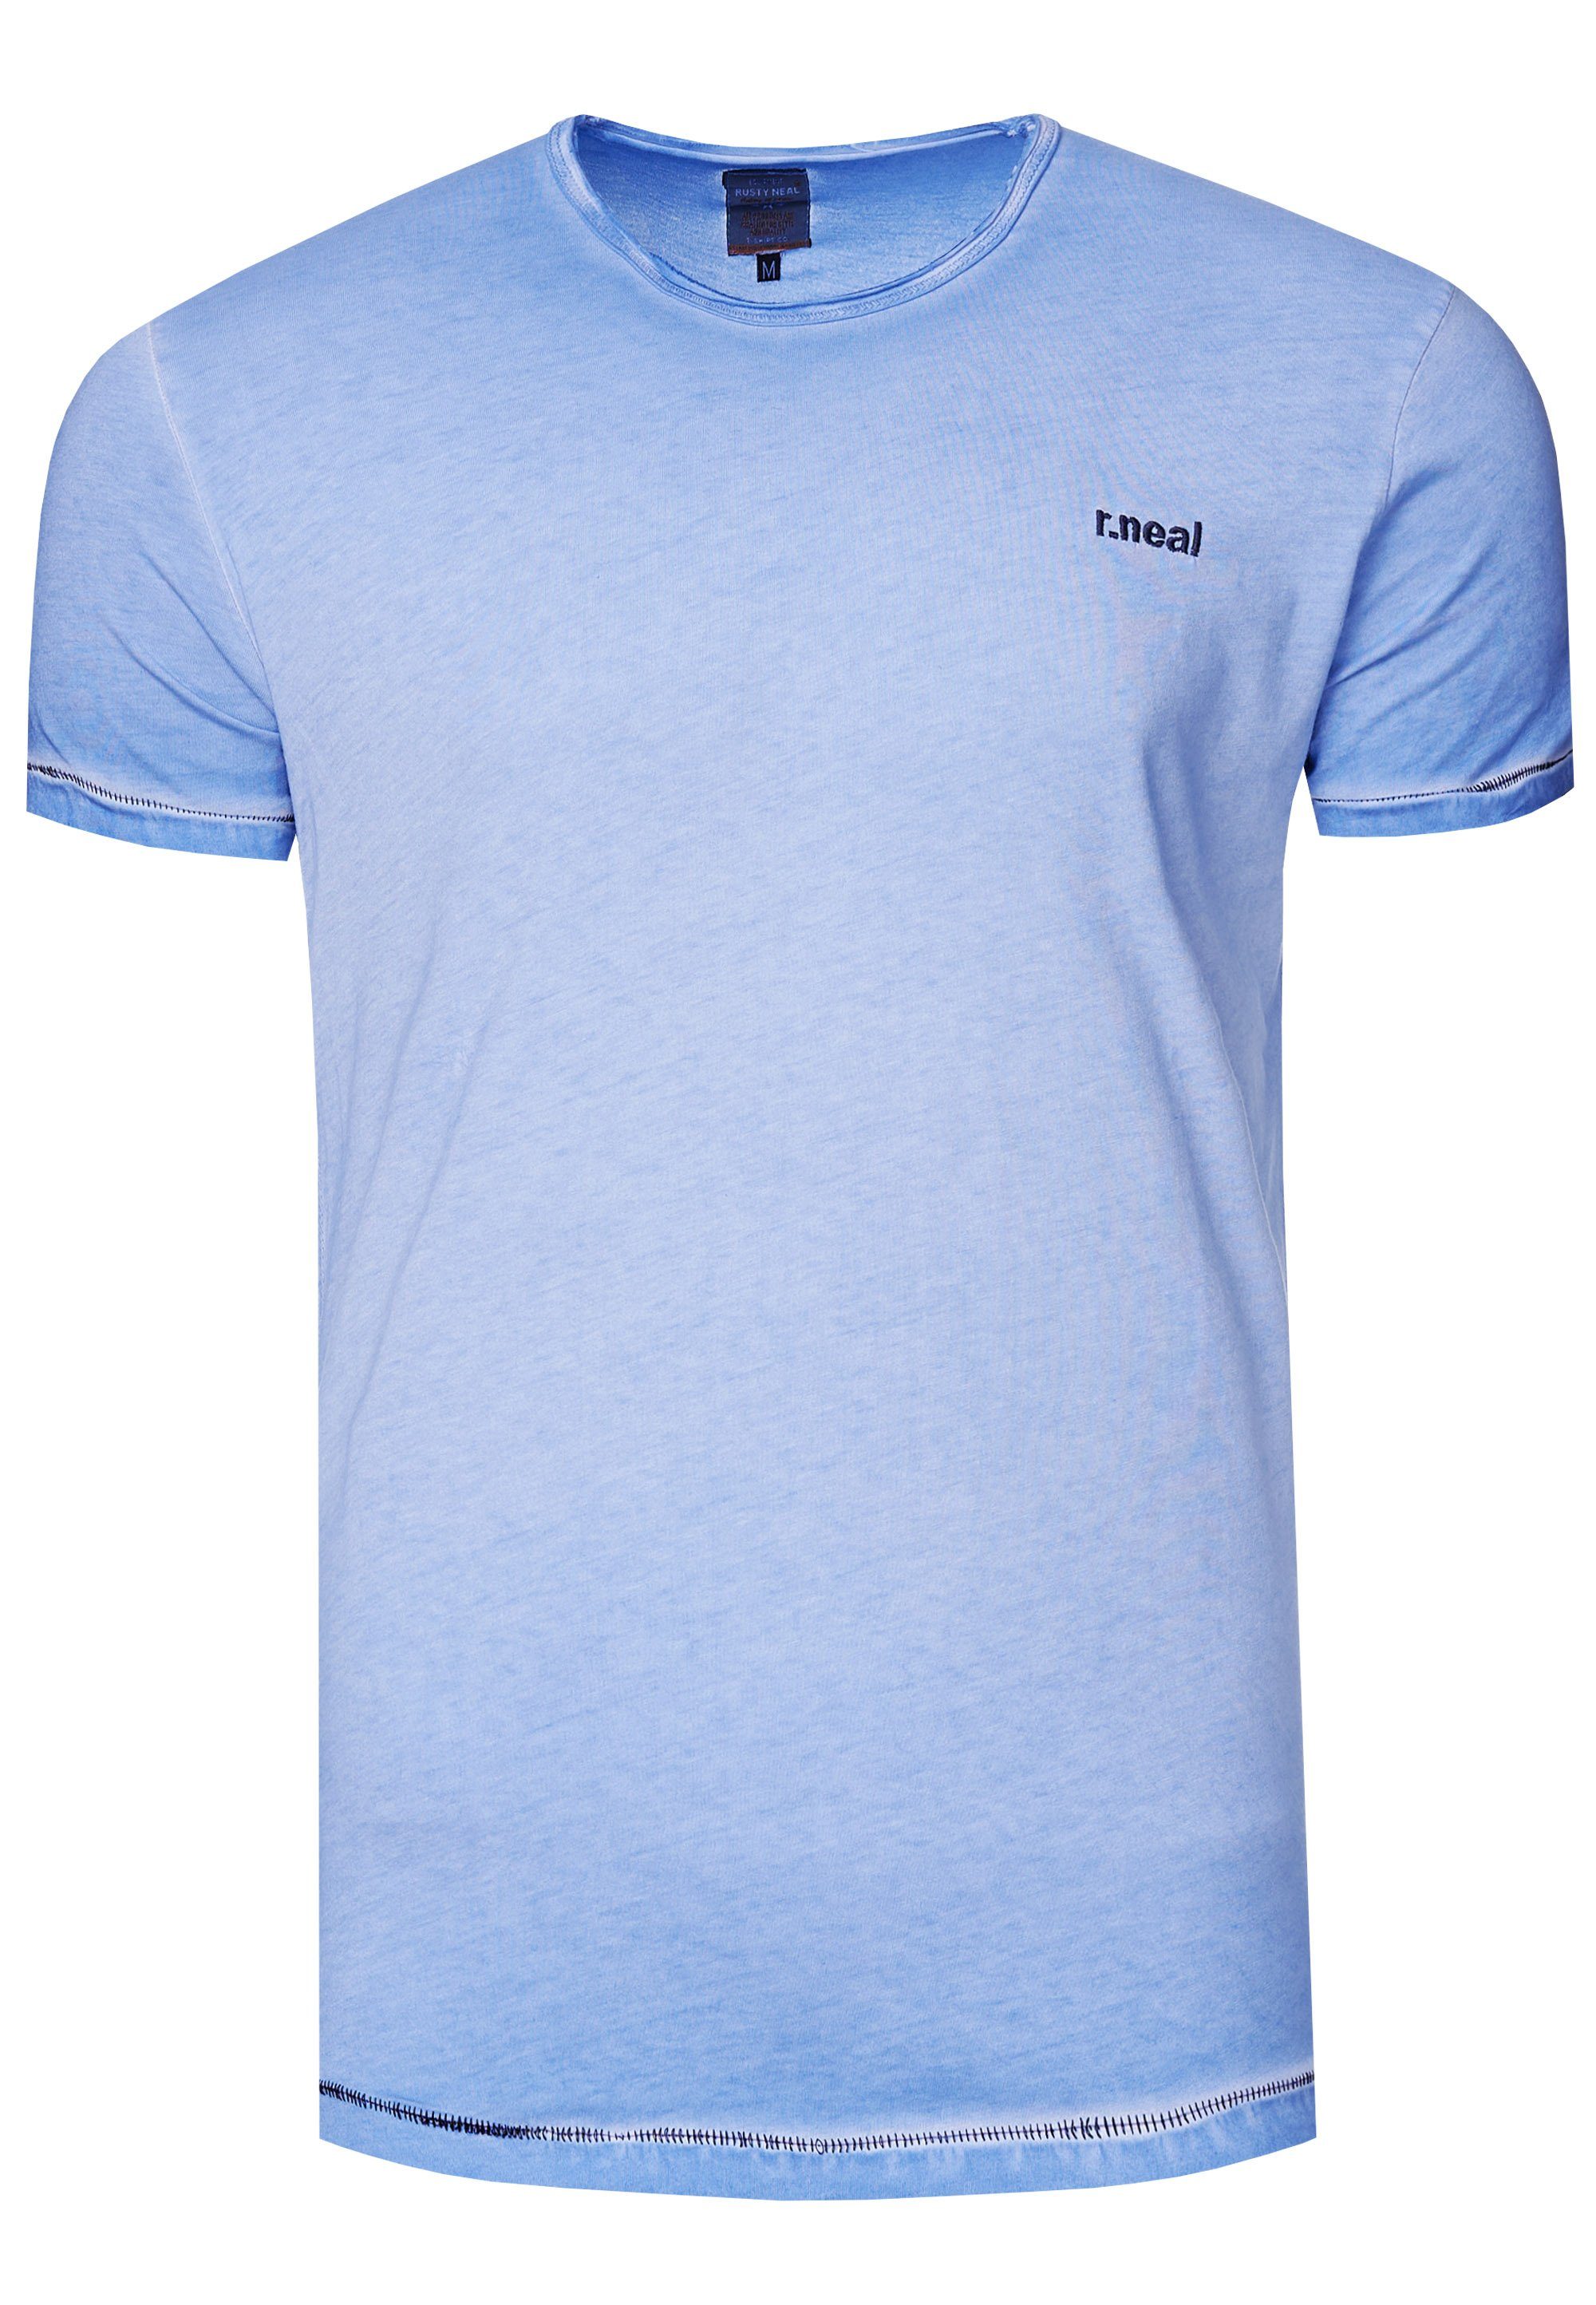 im Rusty Neal T-Shirt blau trendigen Vintage-Look